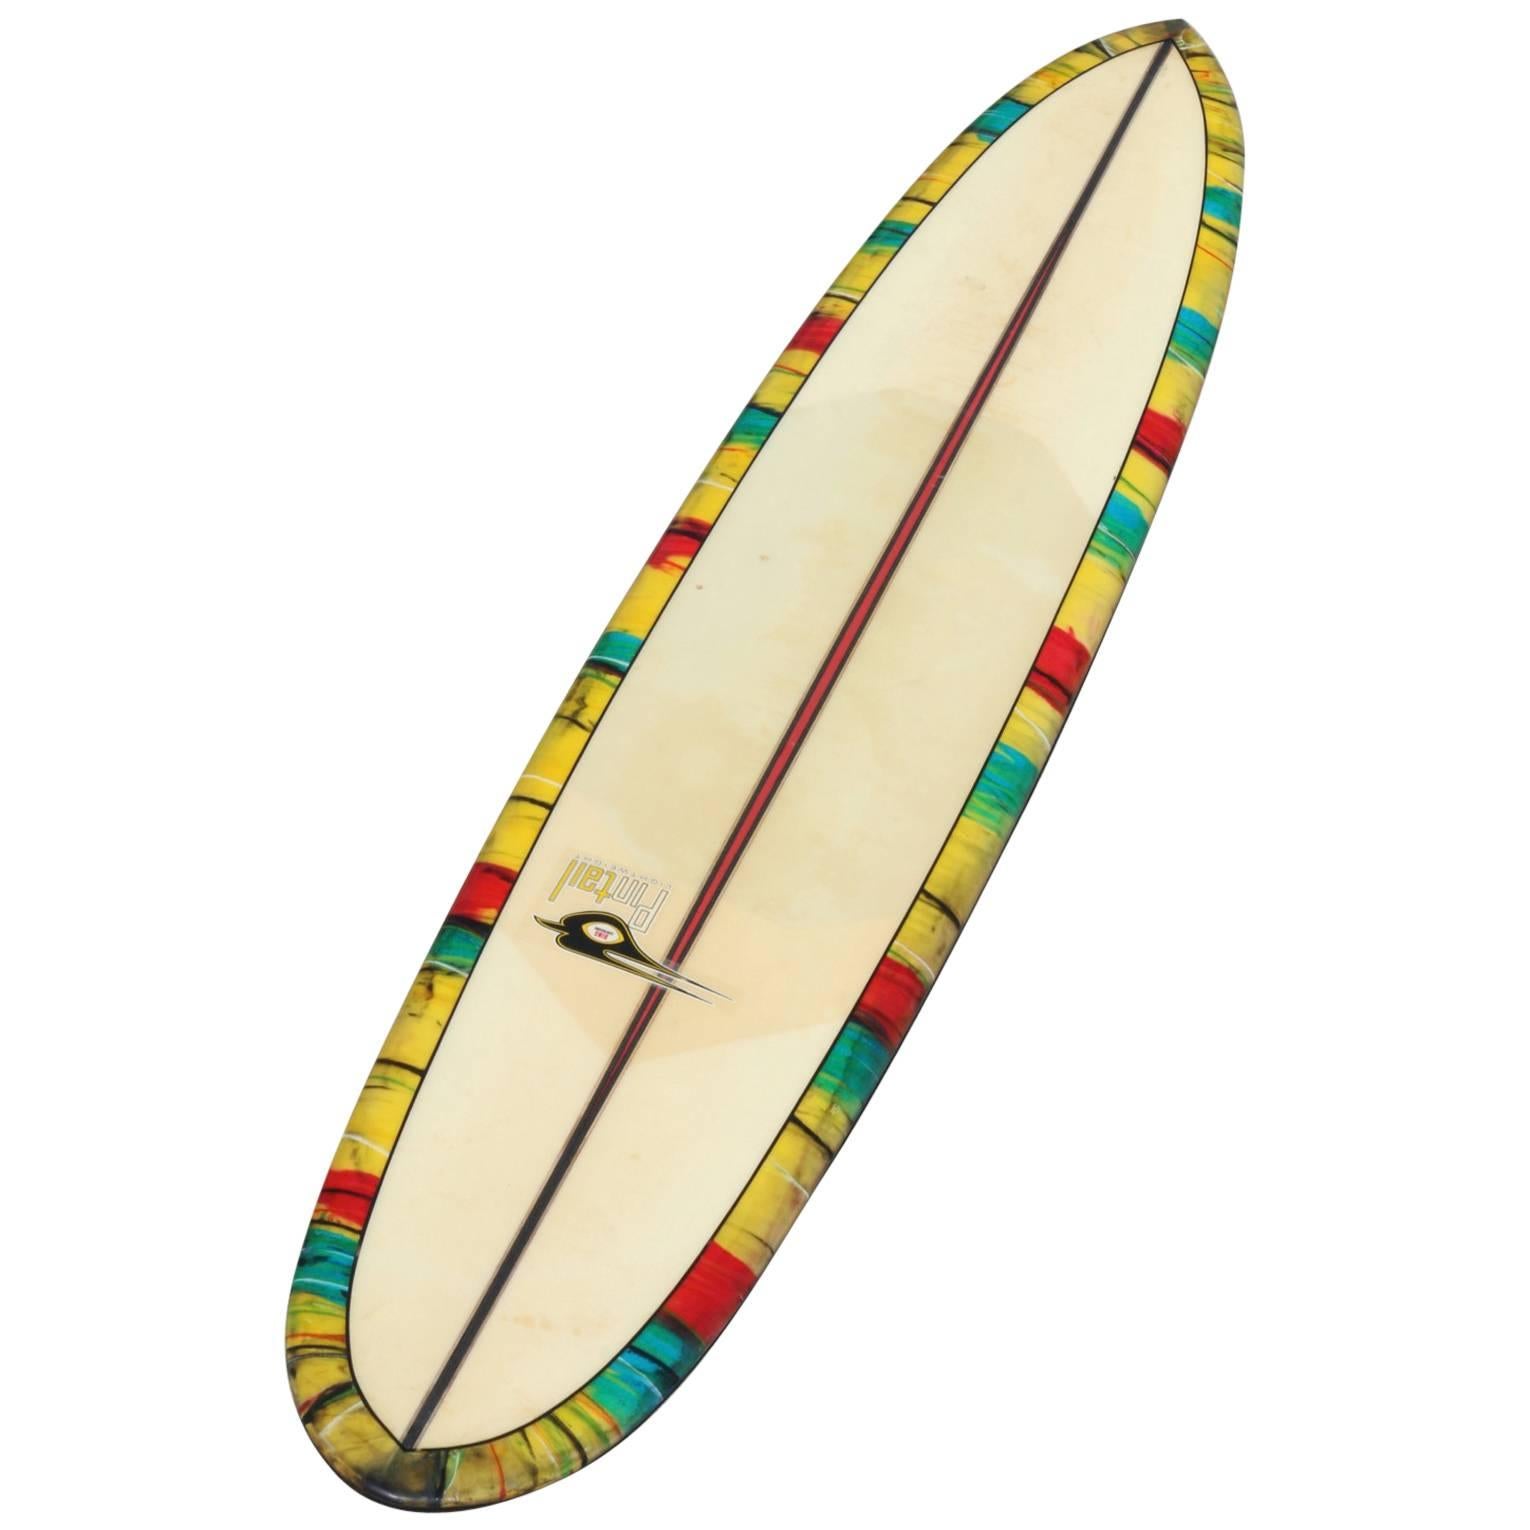 Bing Surfboards Lightweight Pintail, Late 1960s, All Original